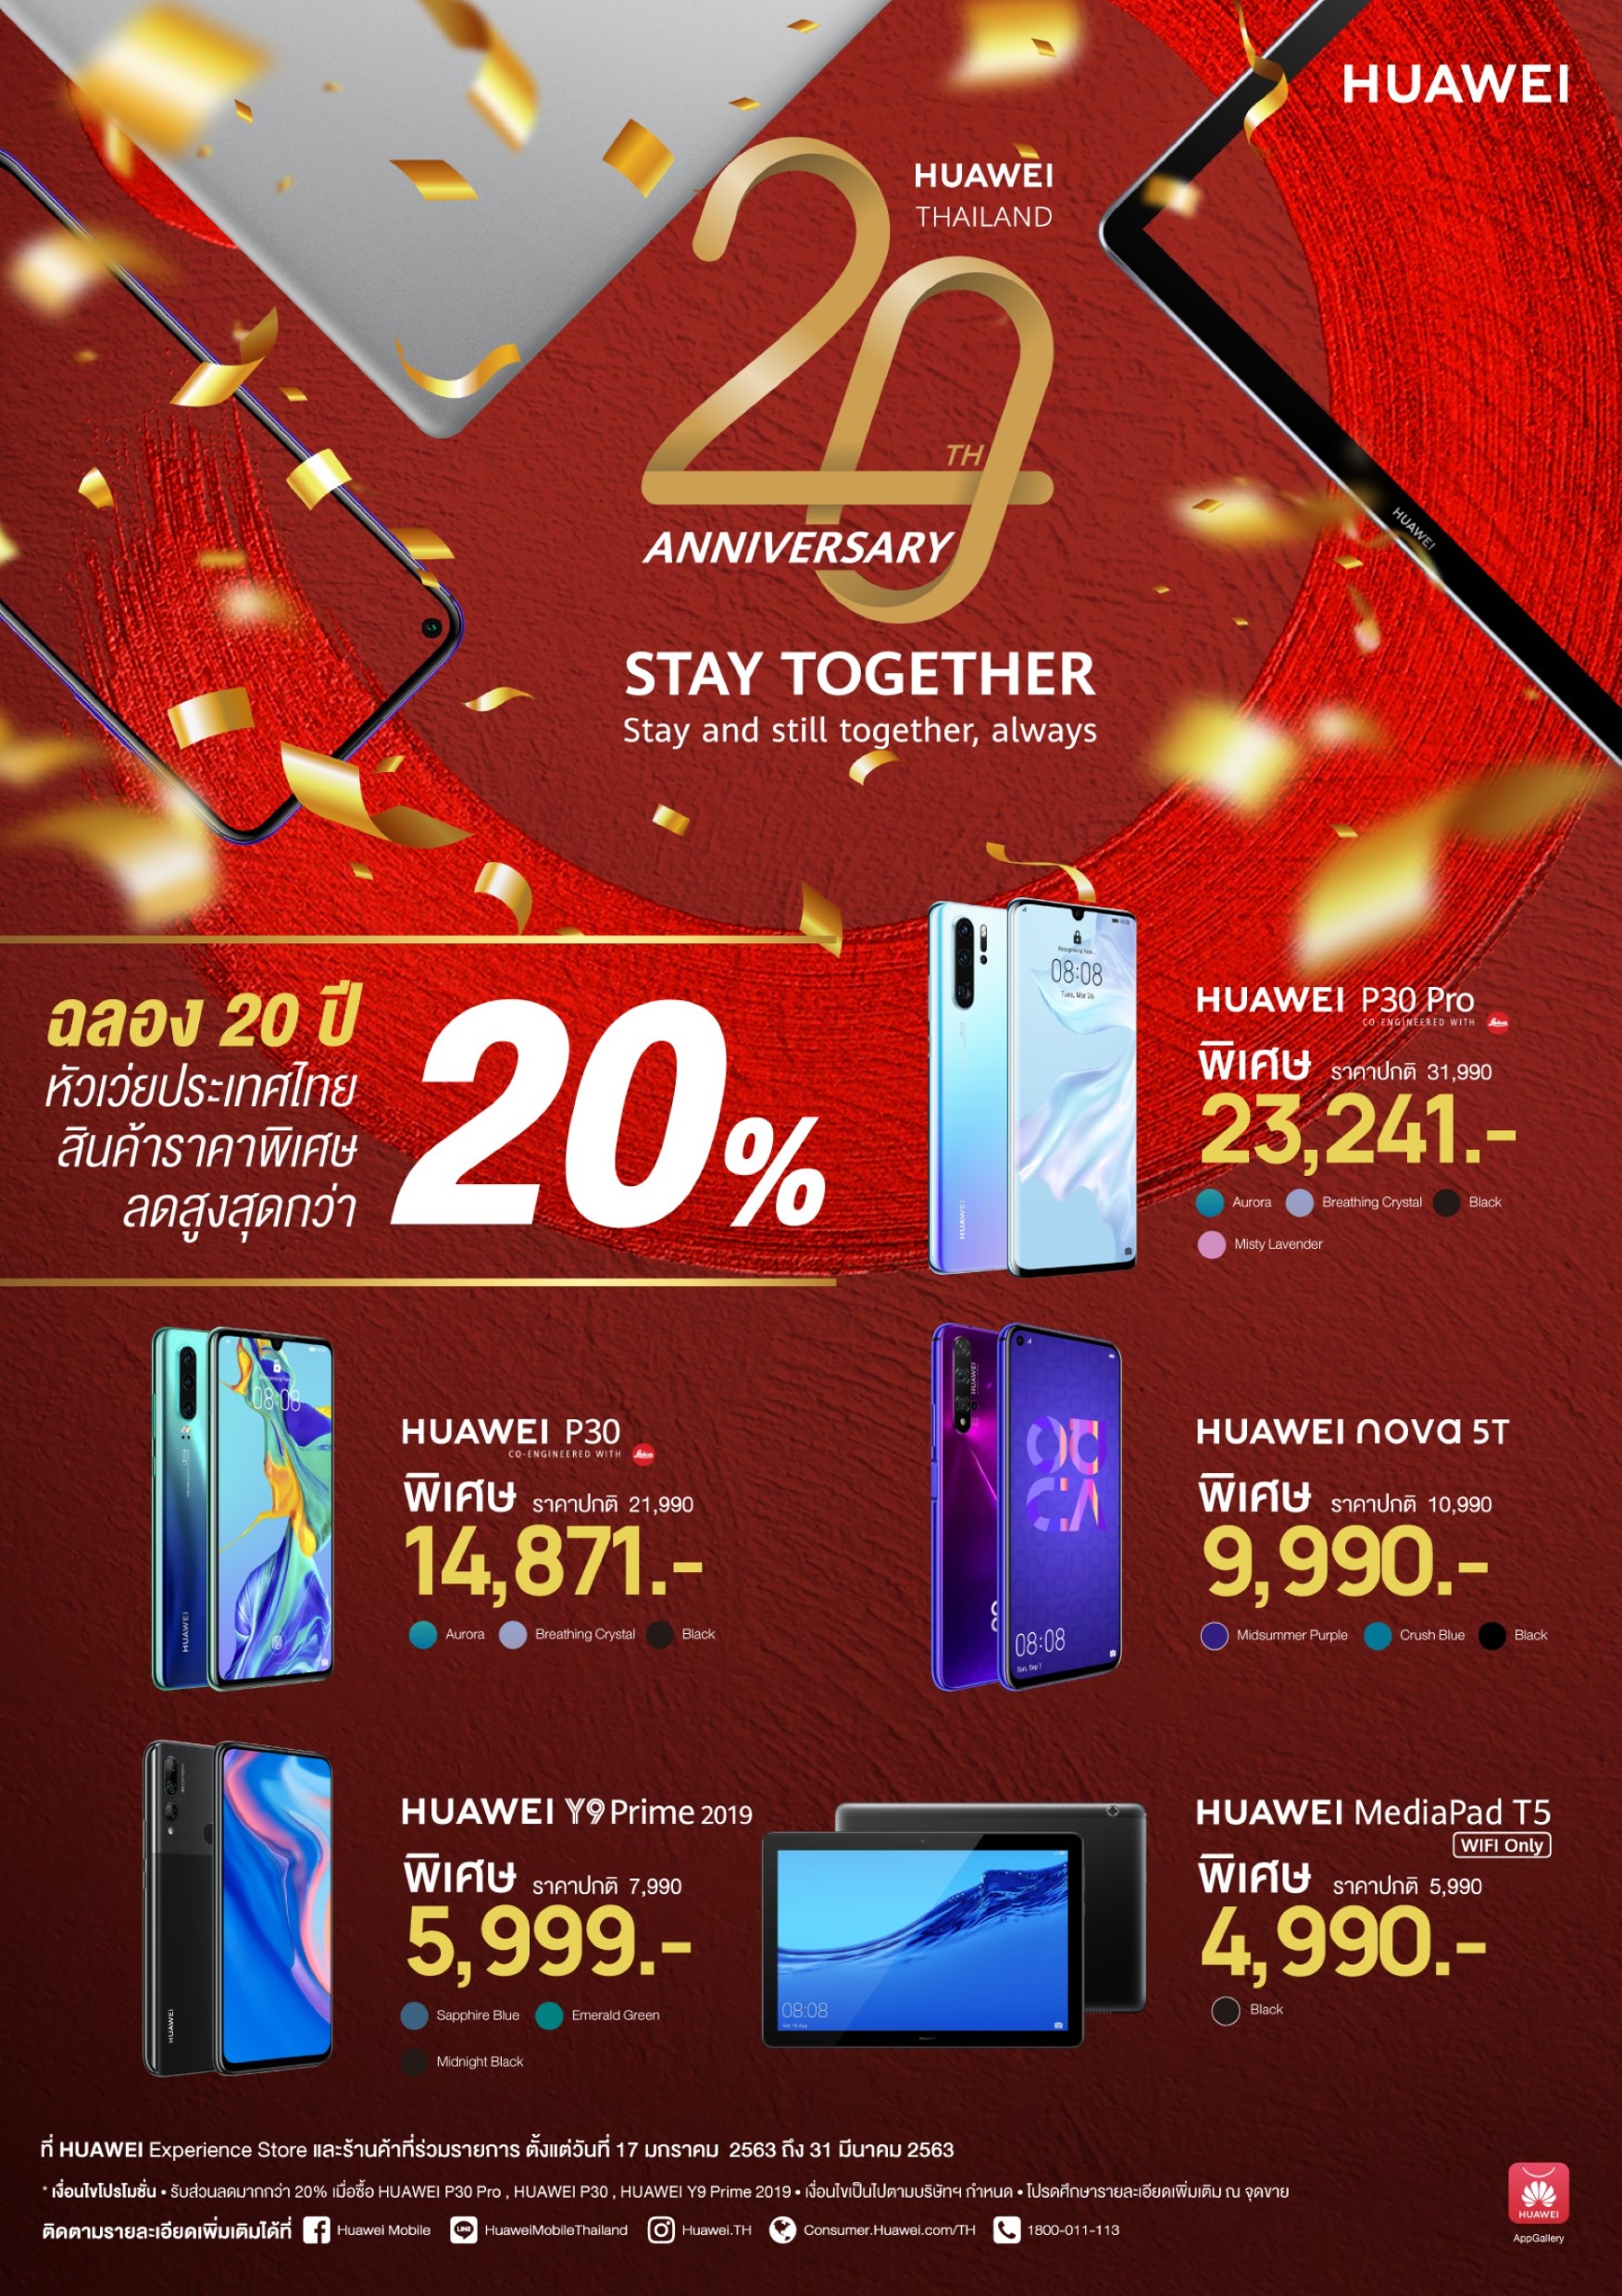 Huawei Thailand 20th Anniversary Campaign 1